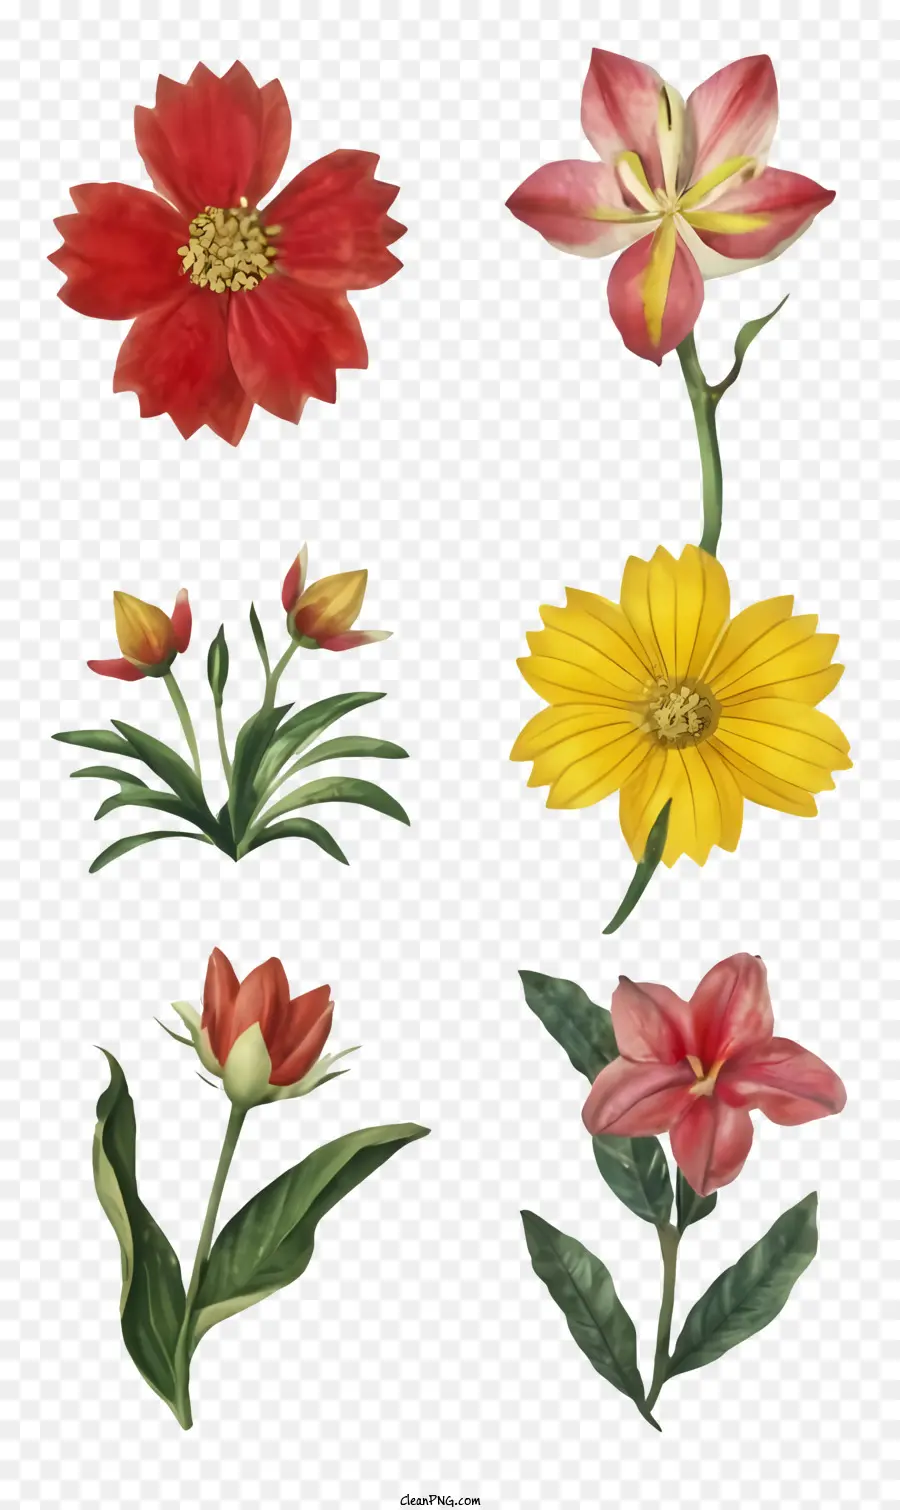 bouquet di fiori - Vibrante bouquet di fiori freschi disposti elegantemente